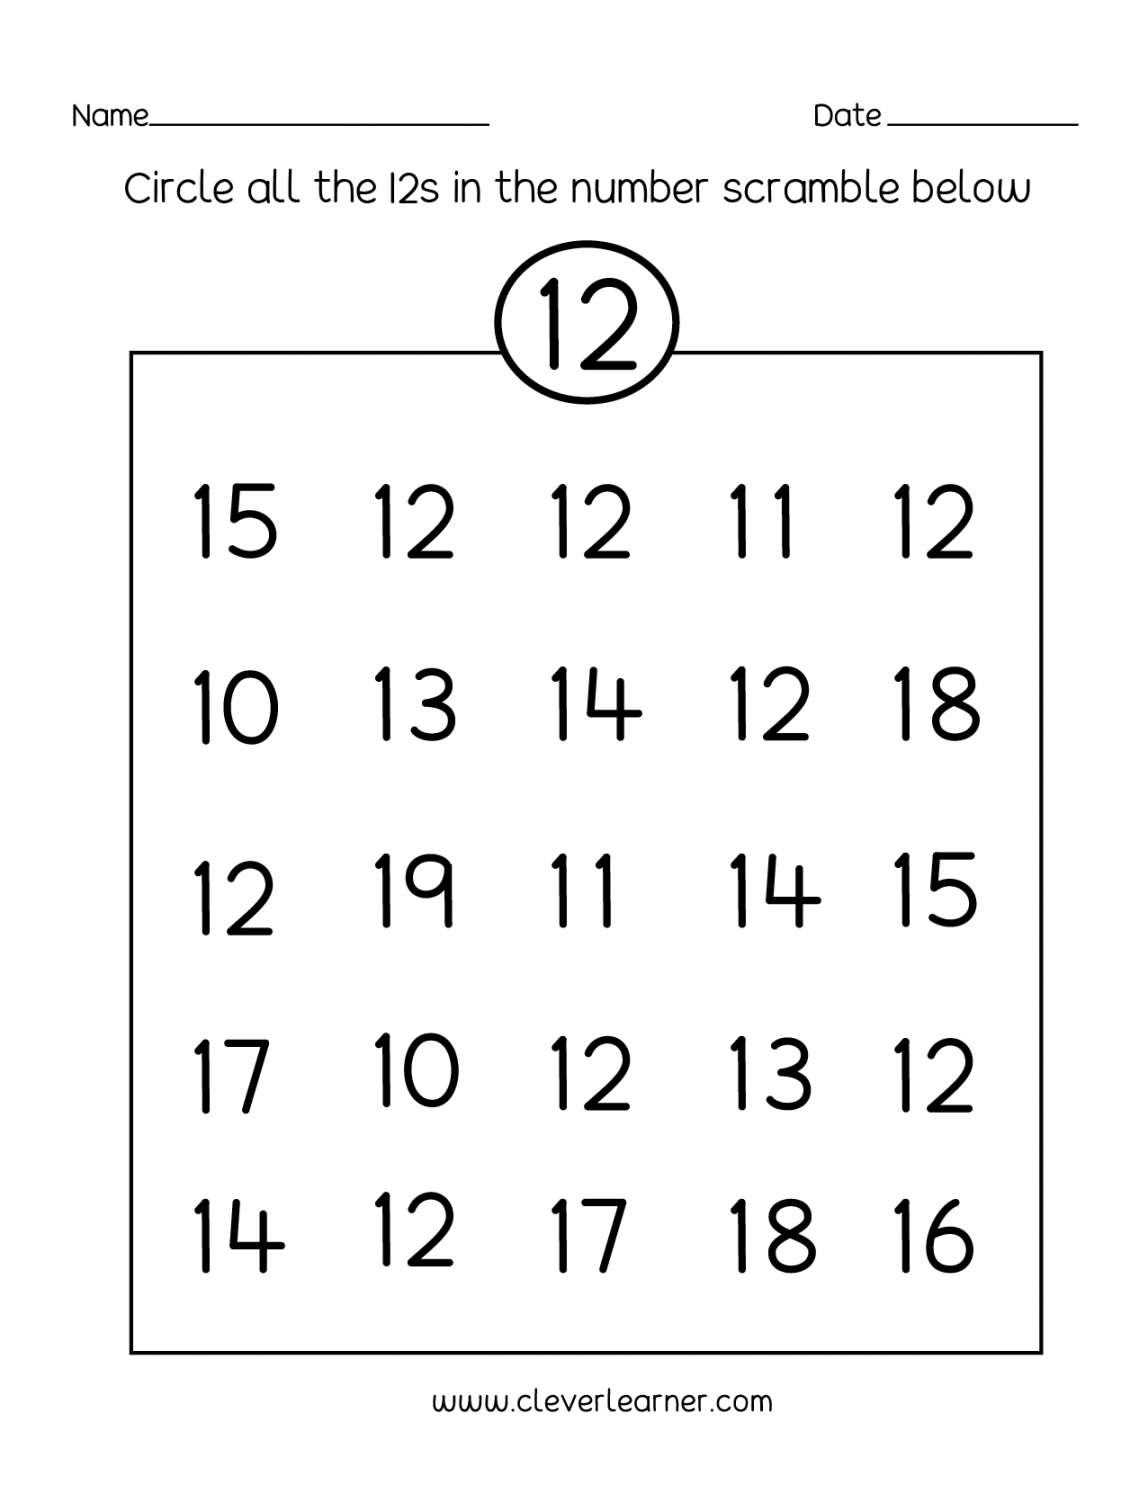 K 12 Free Printable Worksheets - Printable - Number twelve writing, counting and identification printable